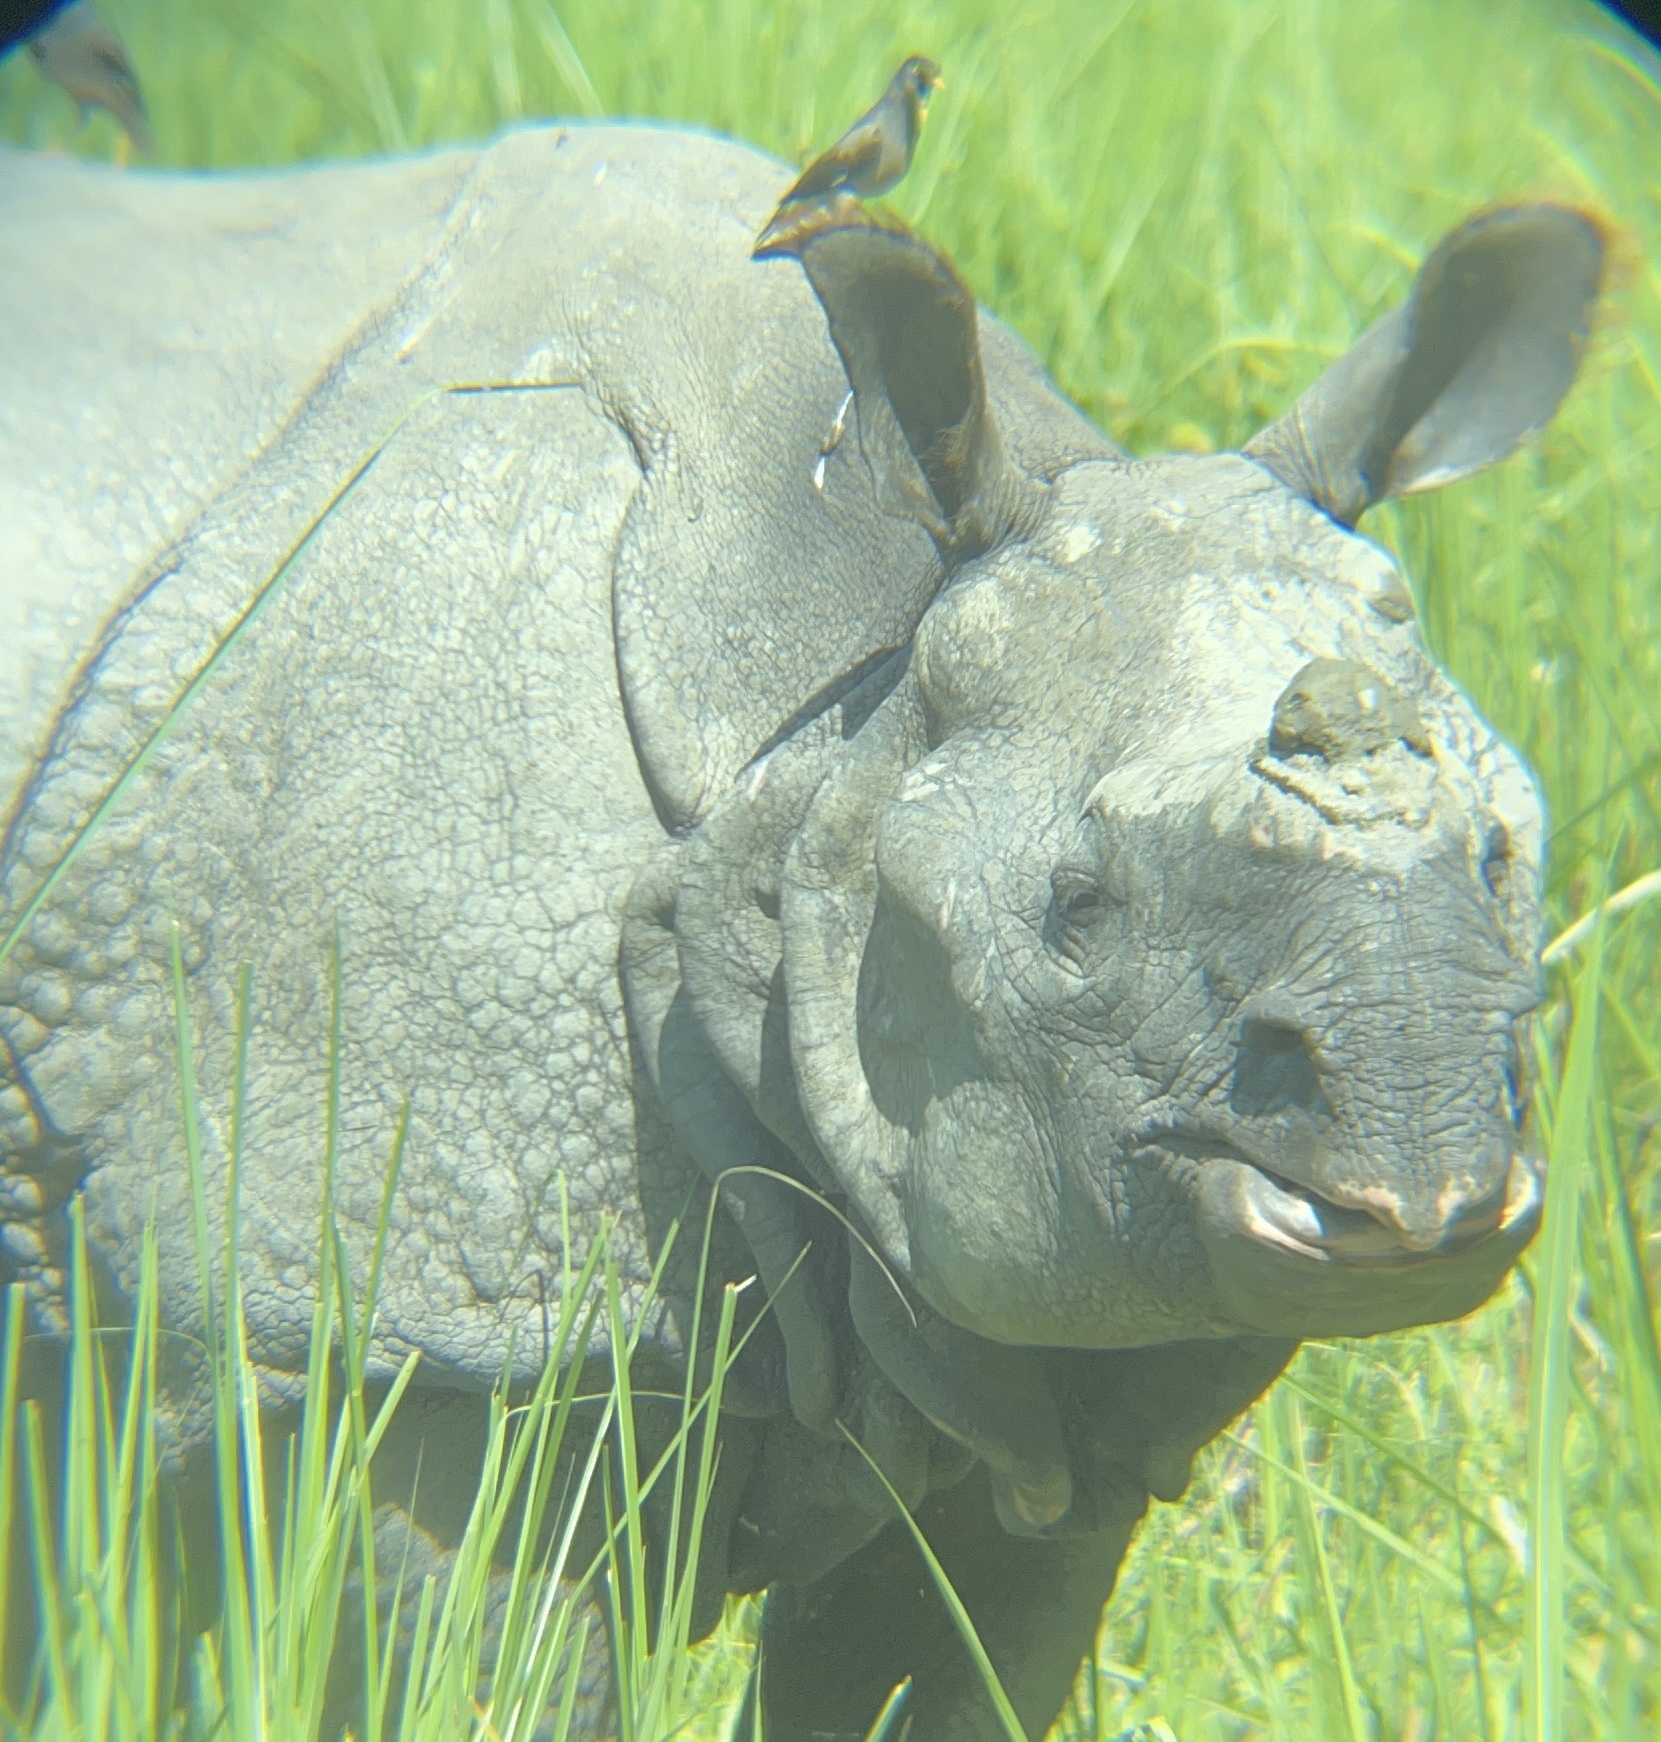 A greater one-horned rhino in Chitwan